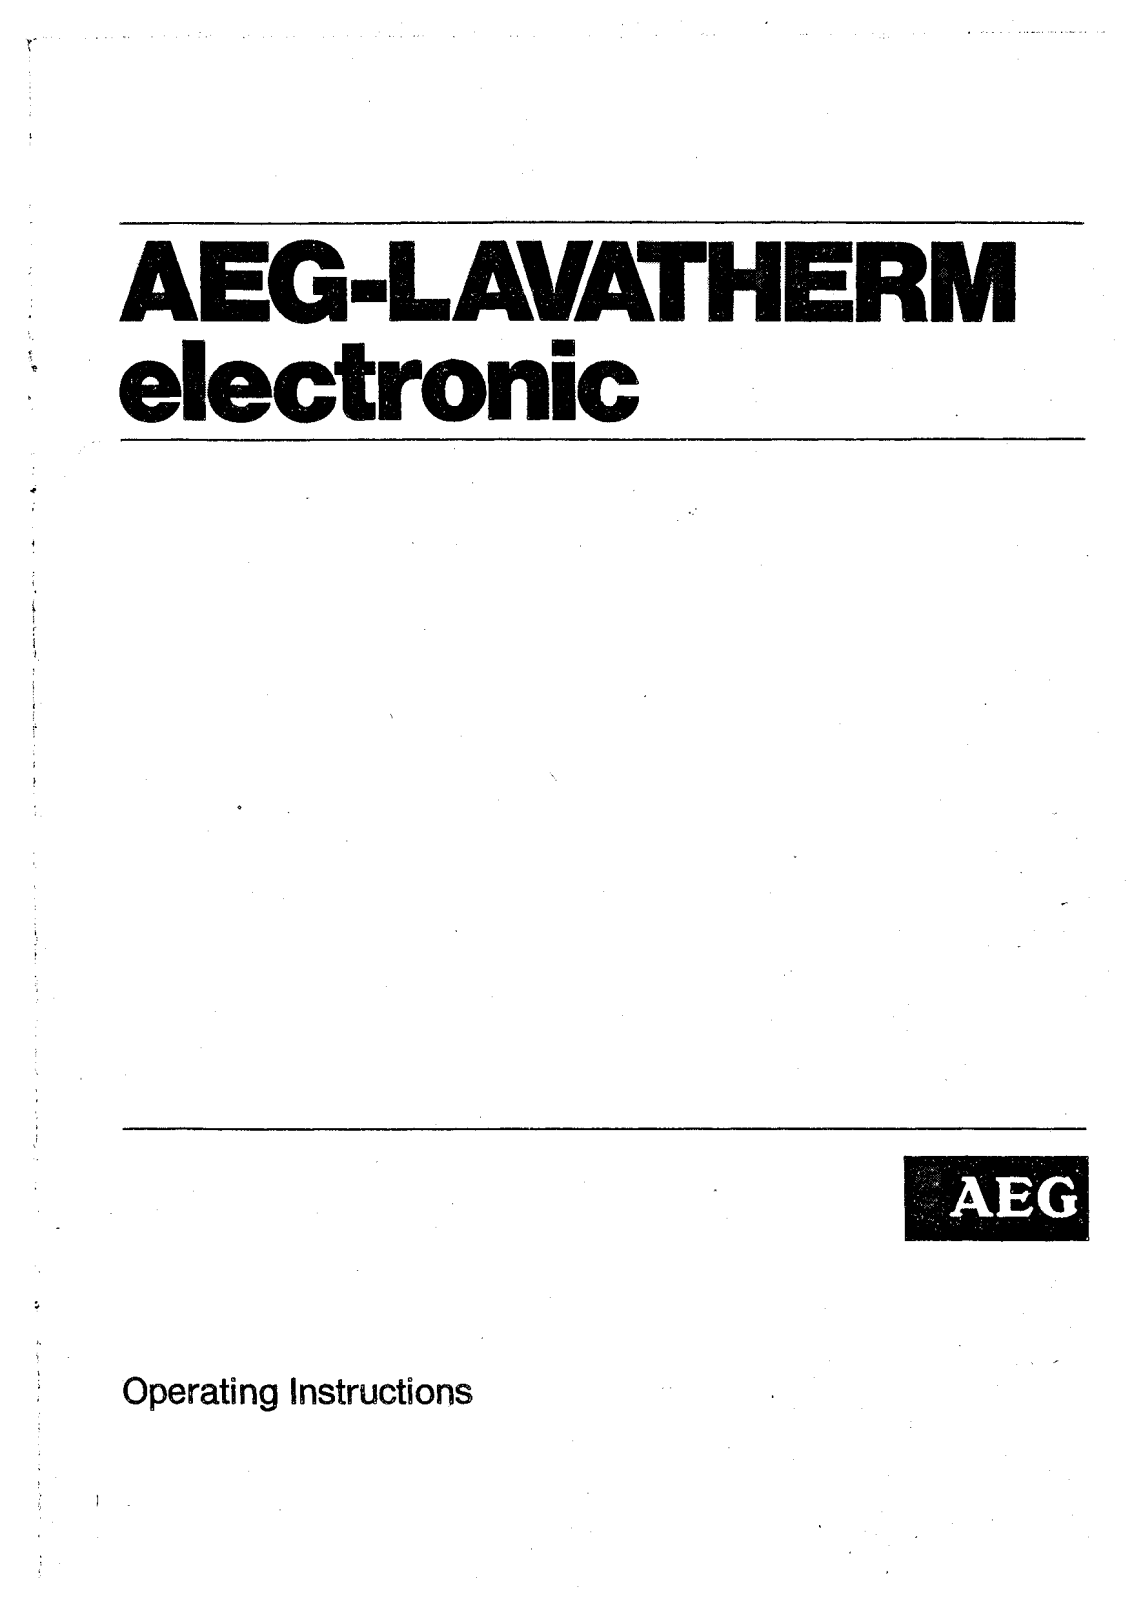 Aeg-electrolux LAVATHERM ELECTRONIC User Manual